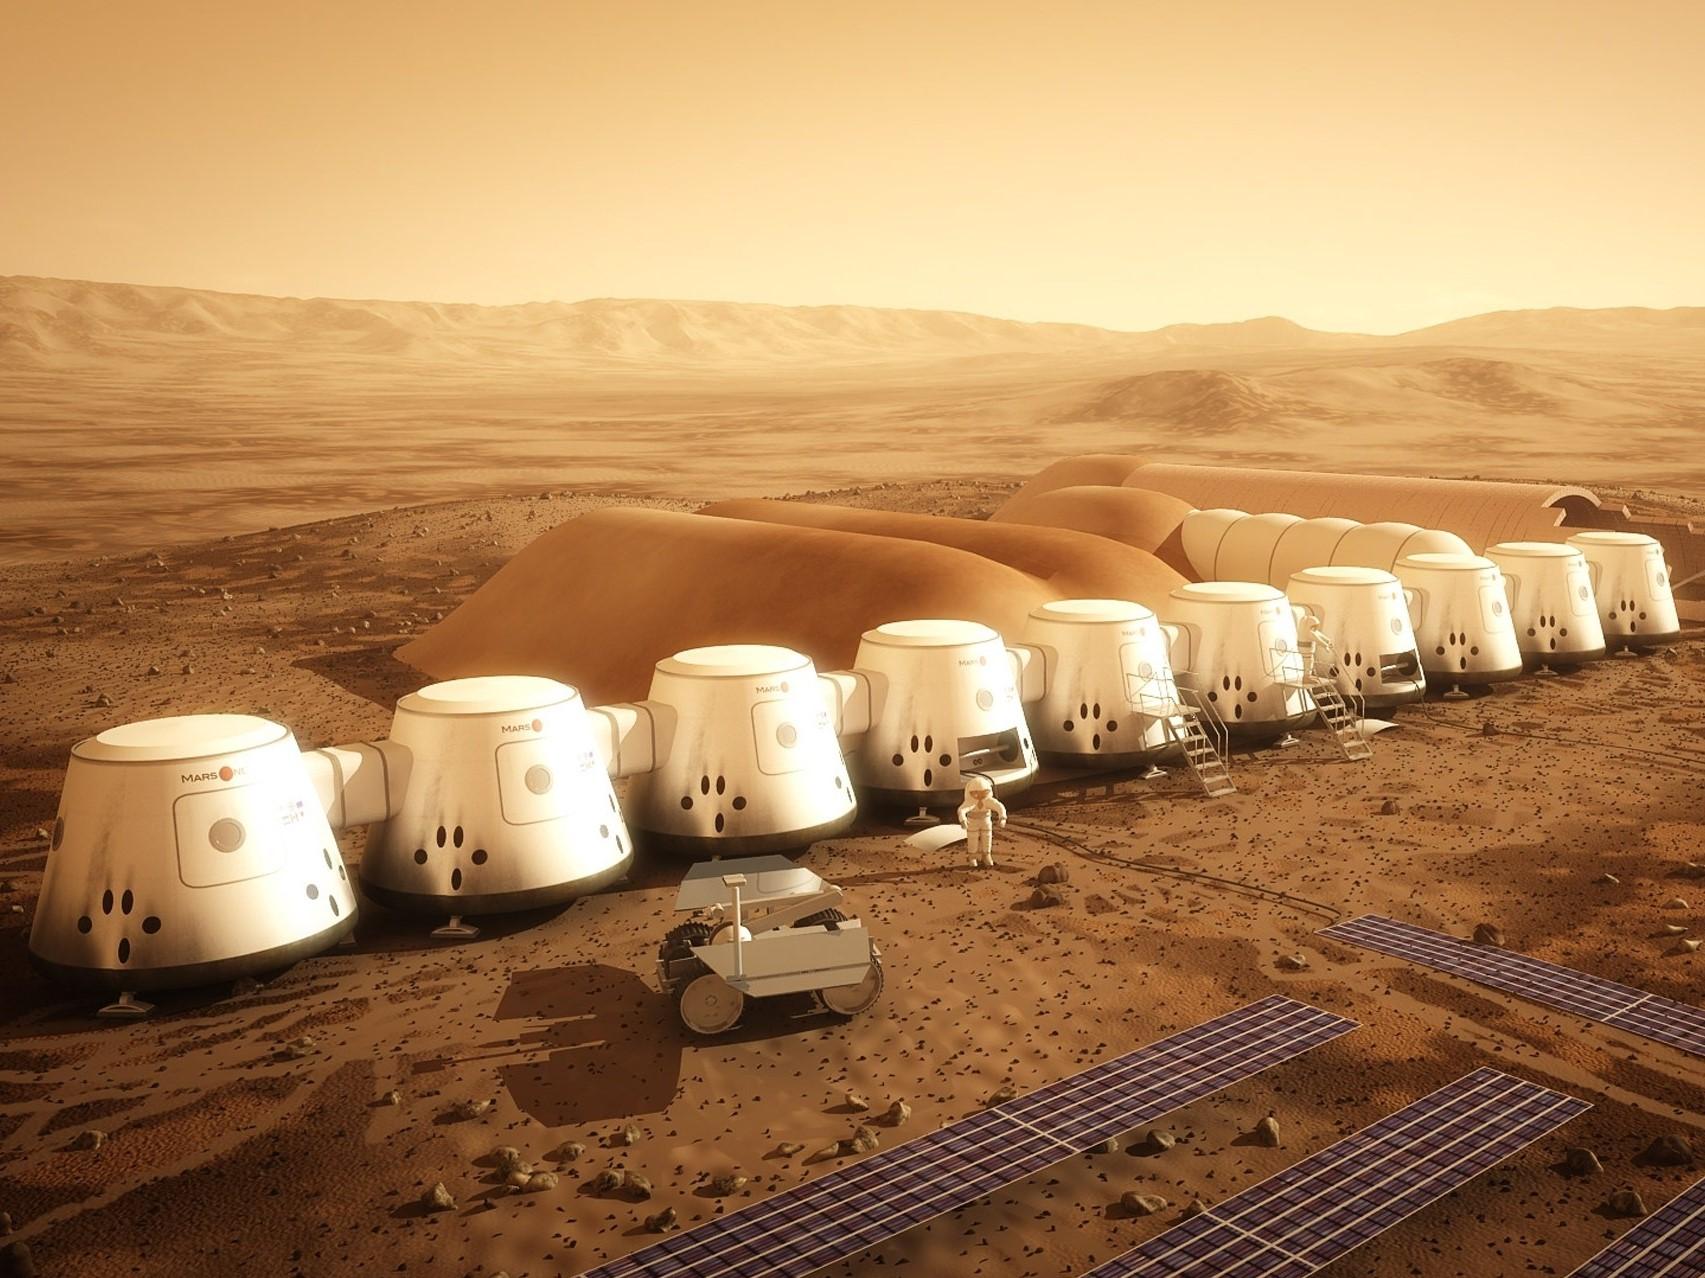 Elon Musk has plans to make Mars habitable for humans